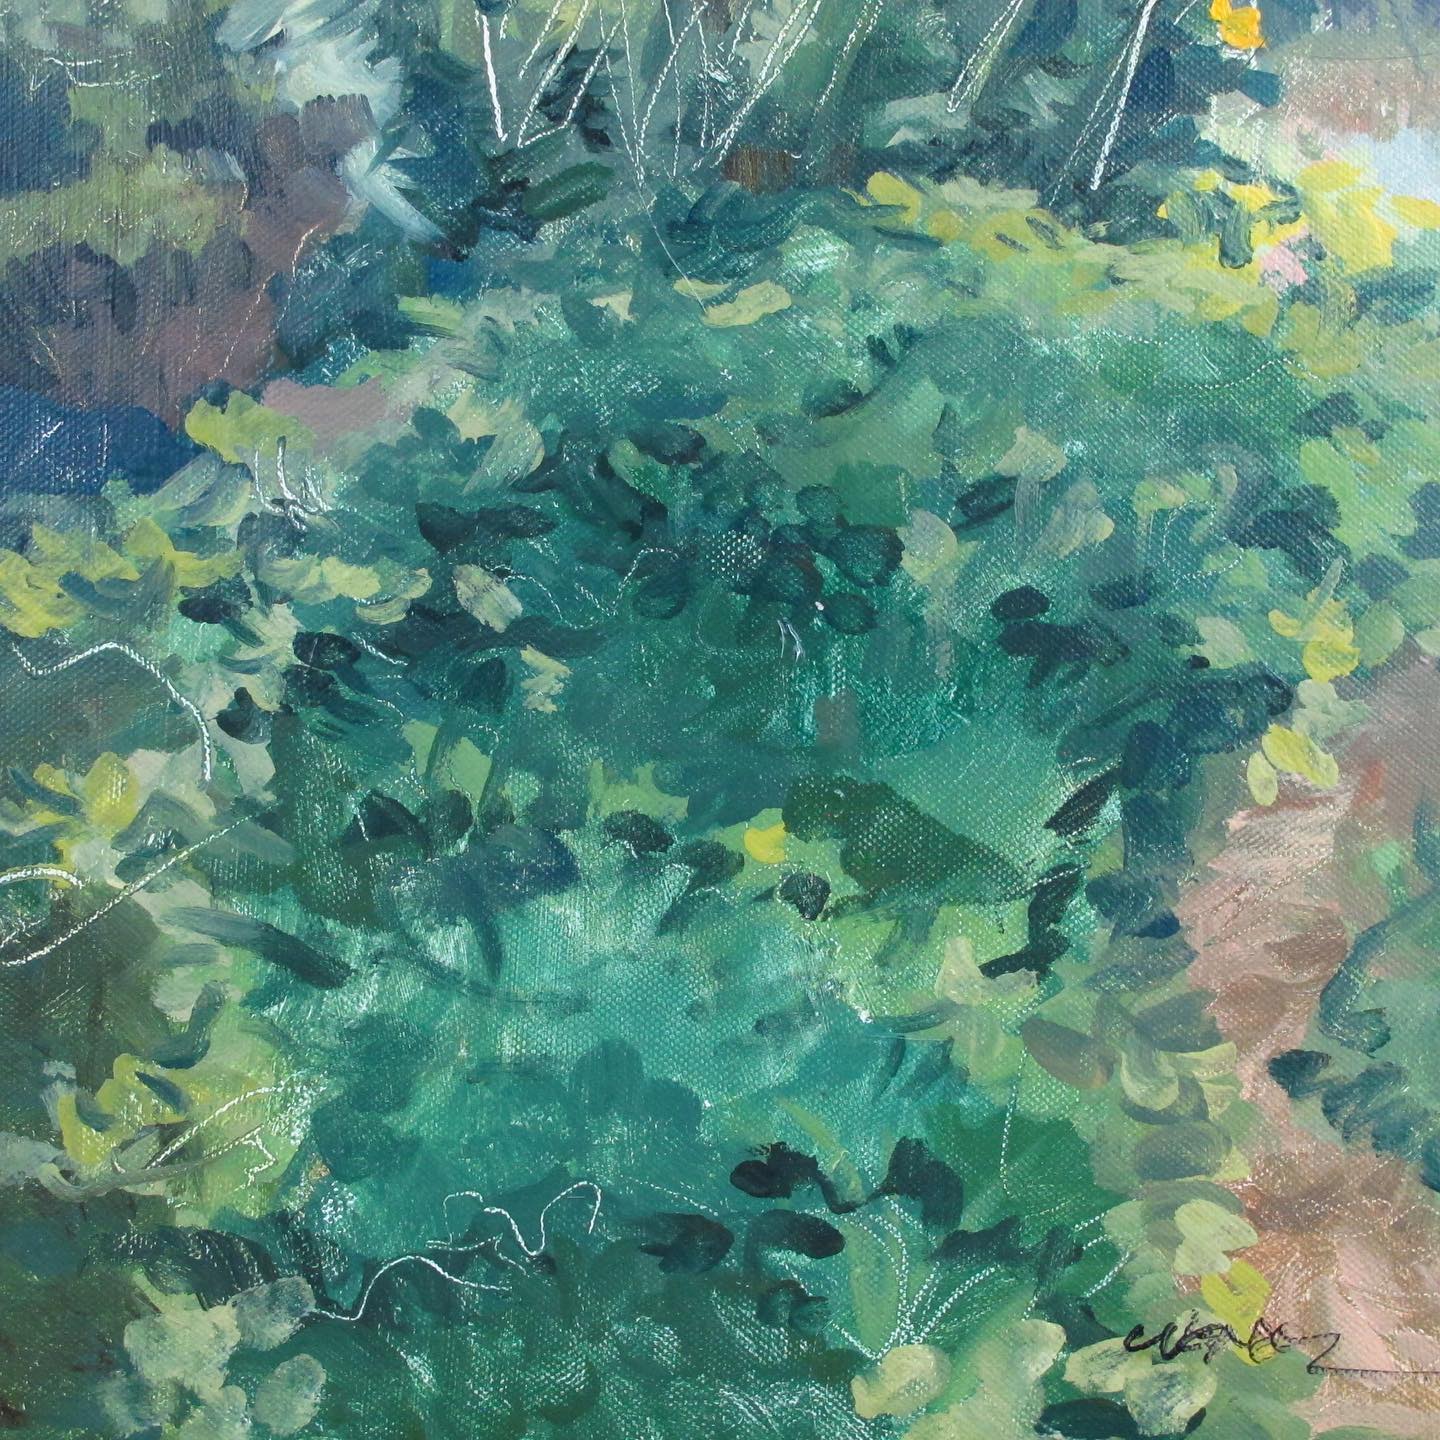 David Wenzel Plein Air Painting of Wildflowers in a Garden, artist of The Hobbit graphic novels